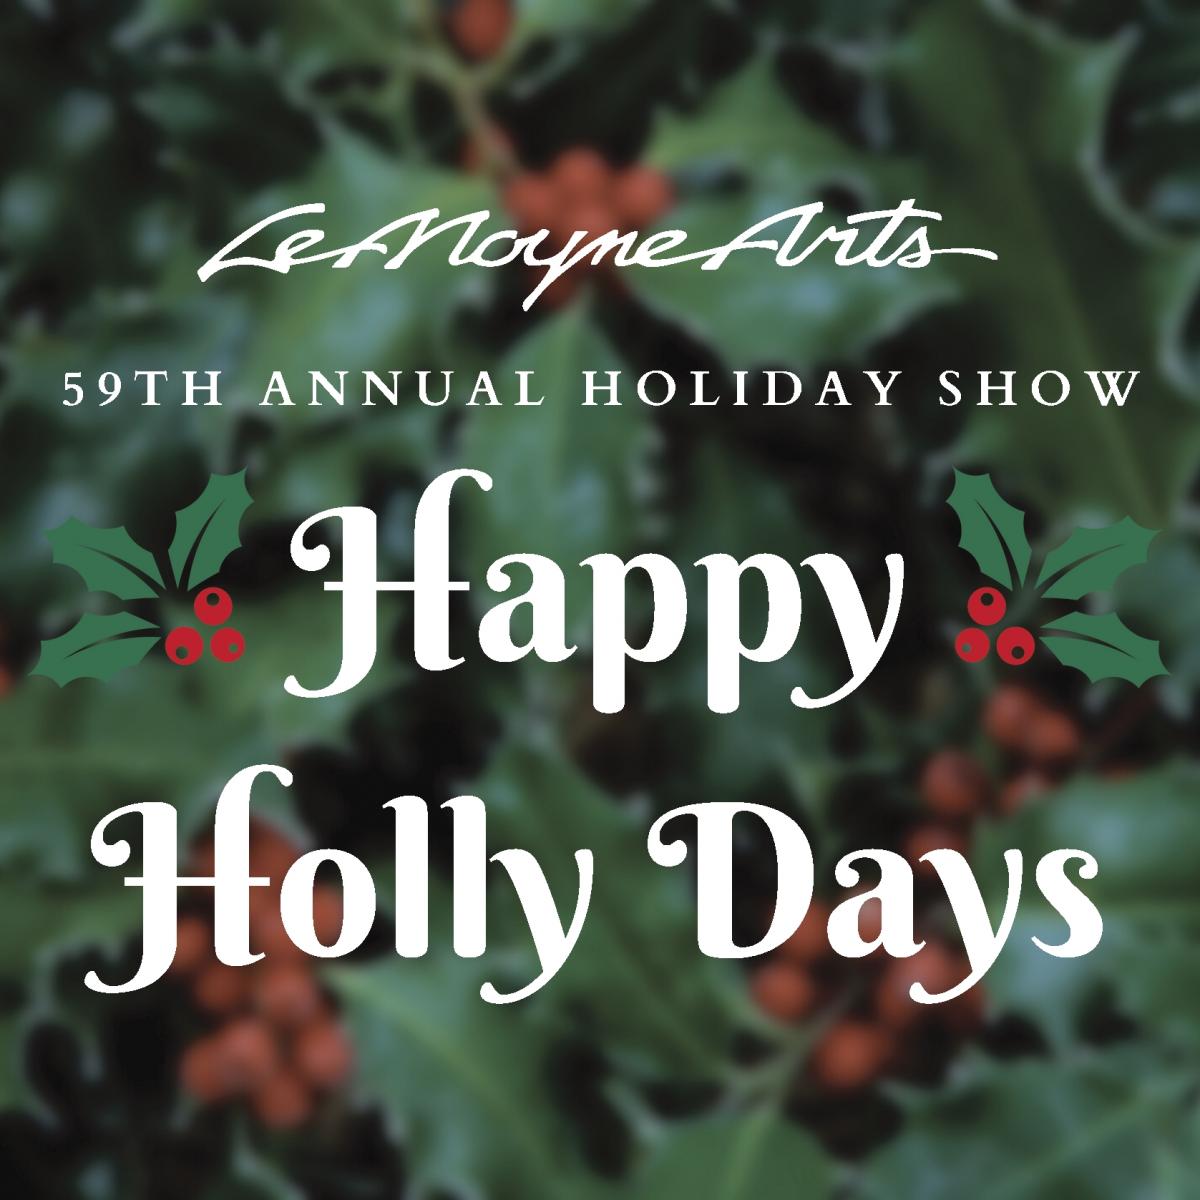 LeMoyne Arts 59th Annual Holiday Show: "Happy Holly Days" cover image